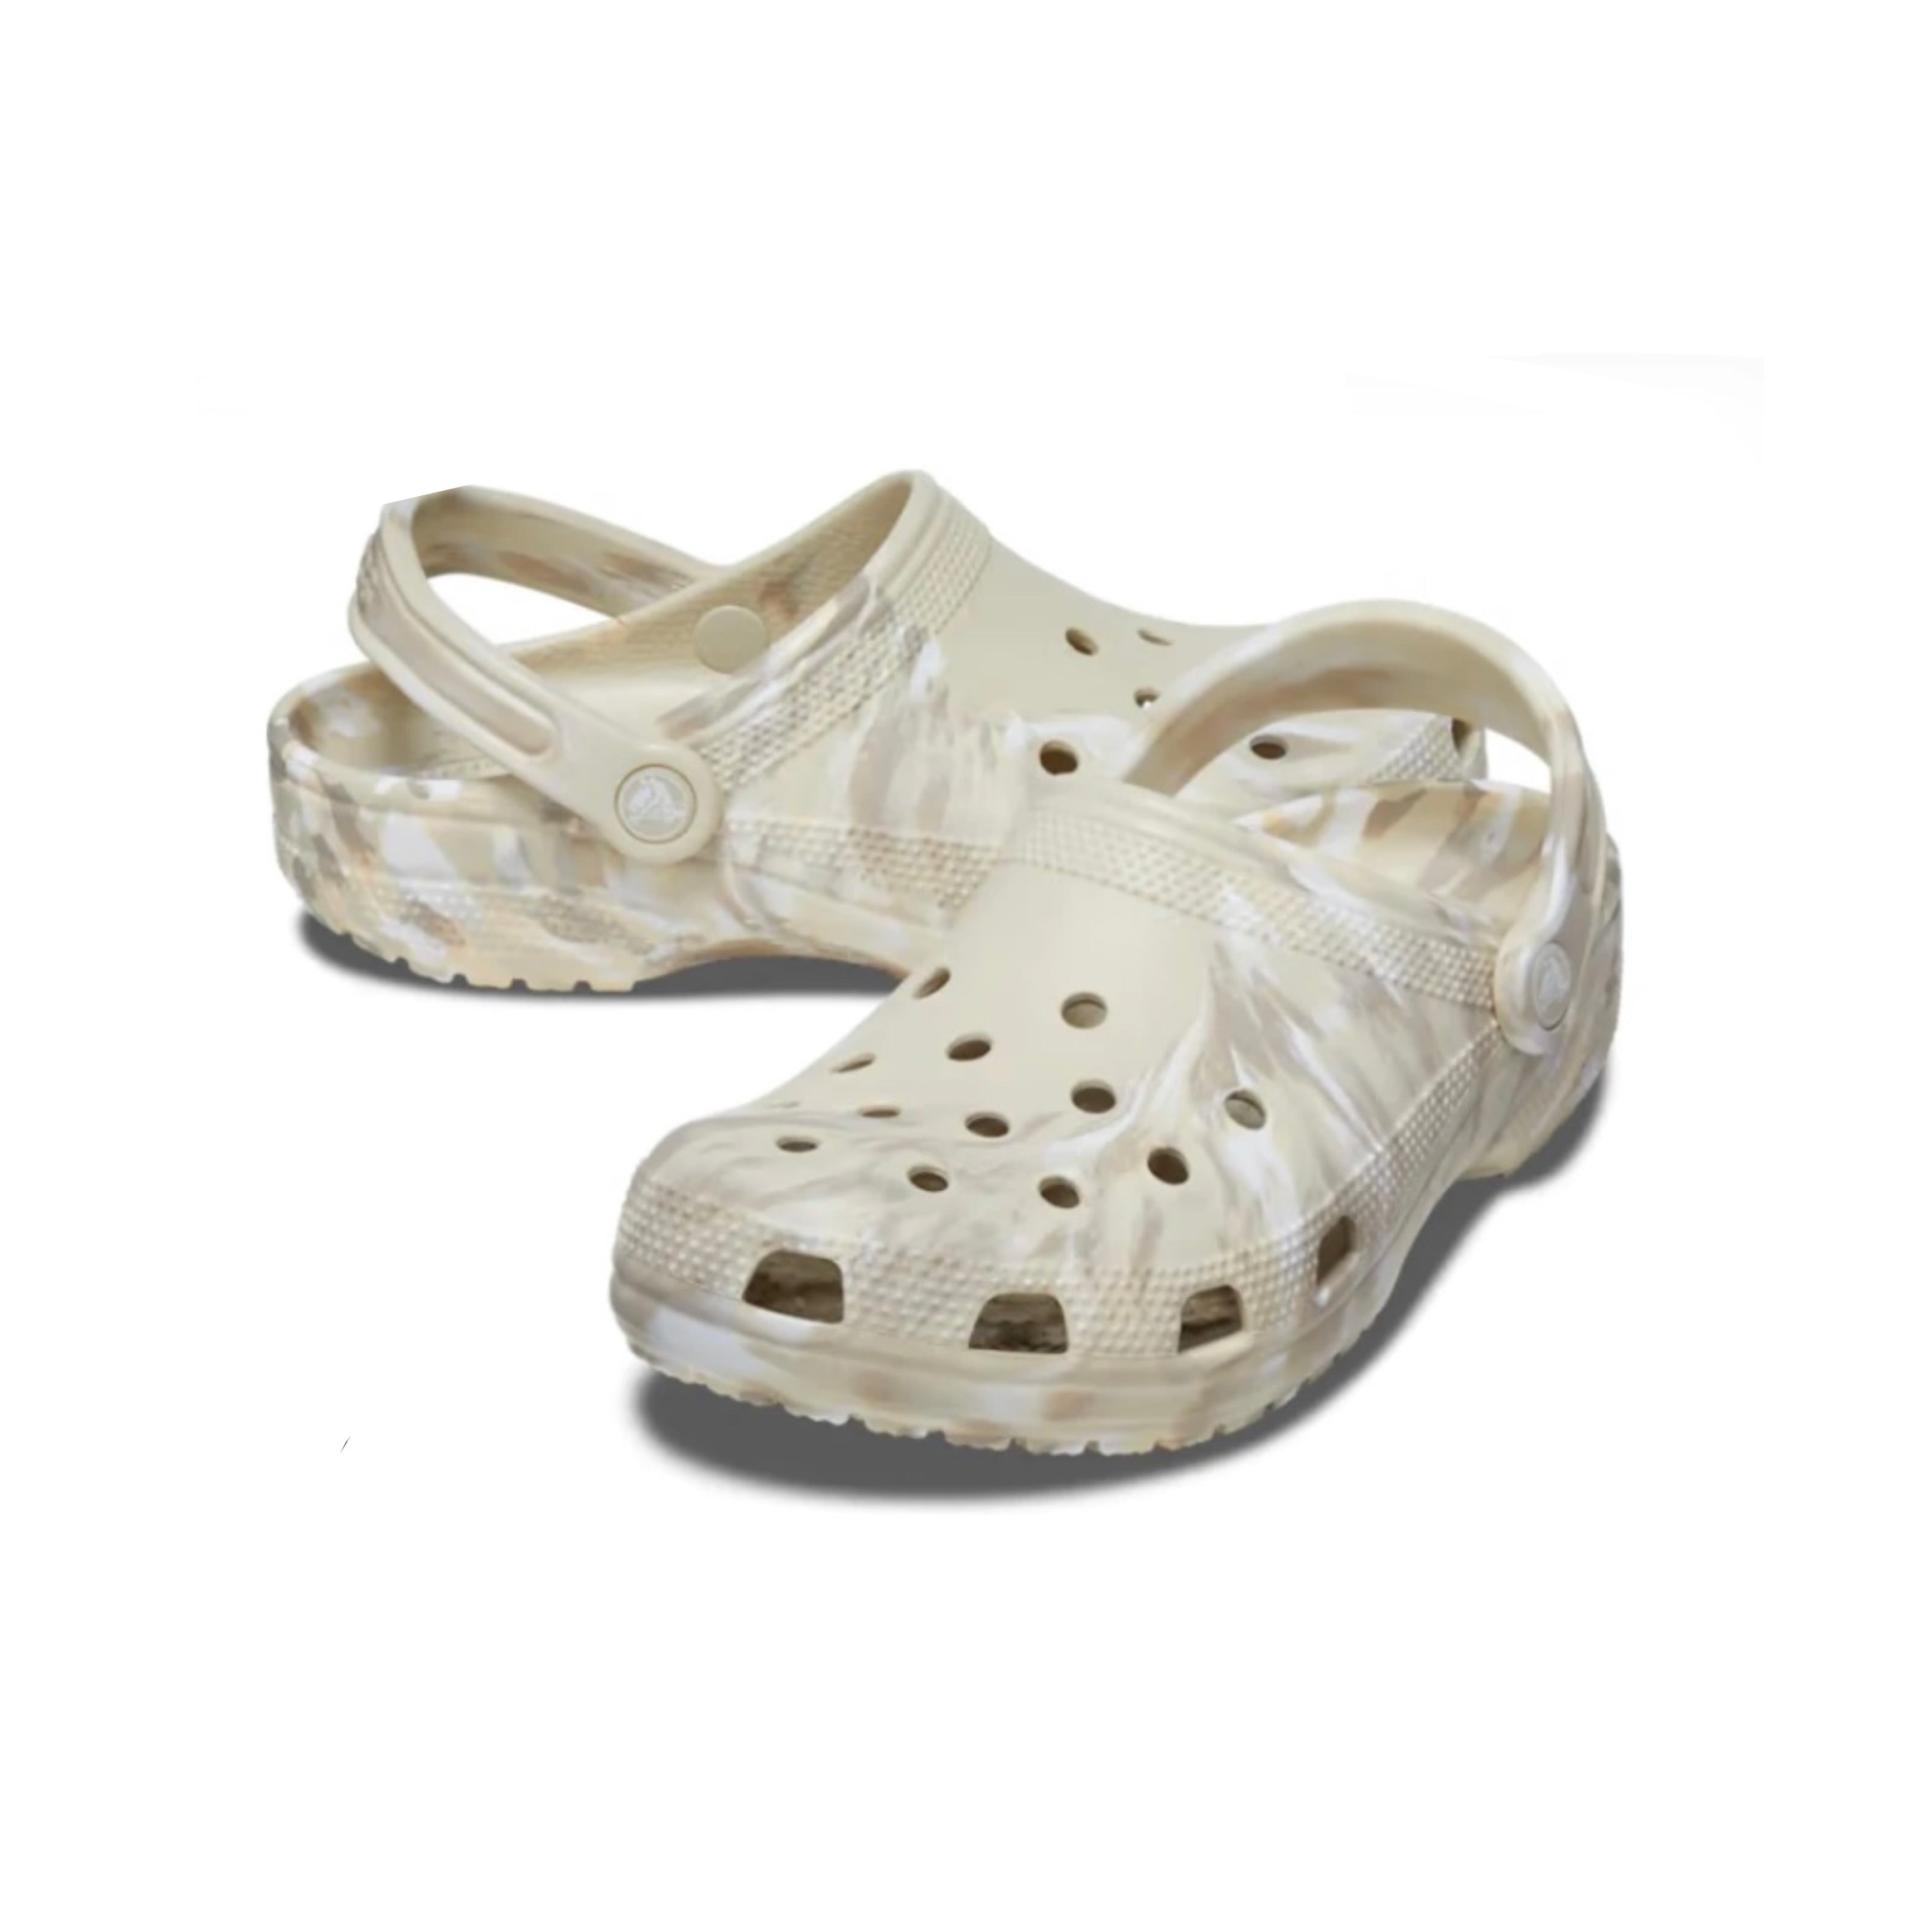 Marble beige crocs